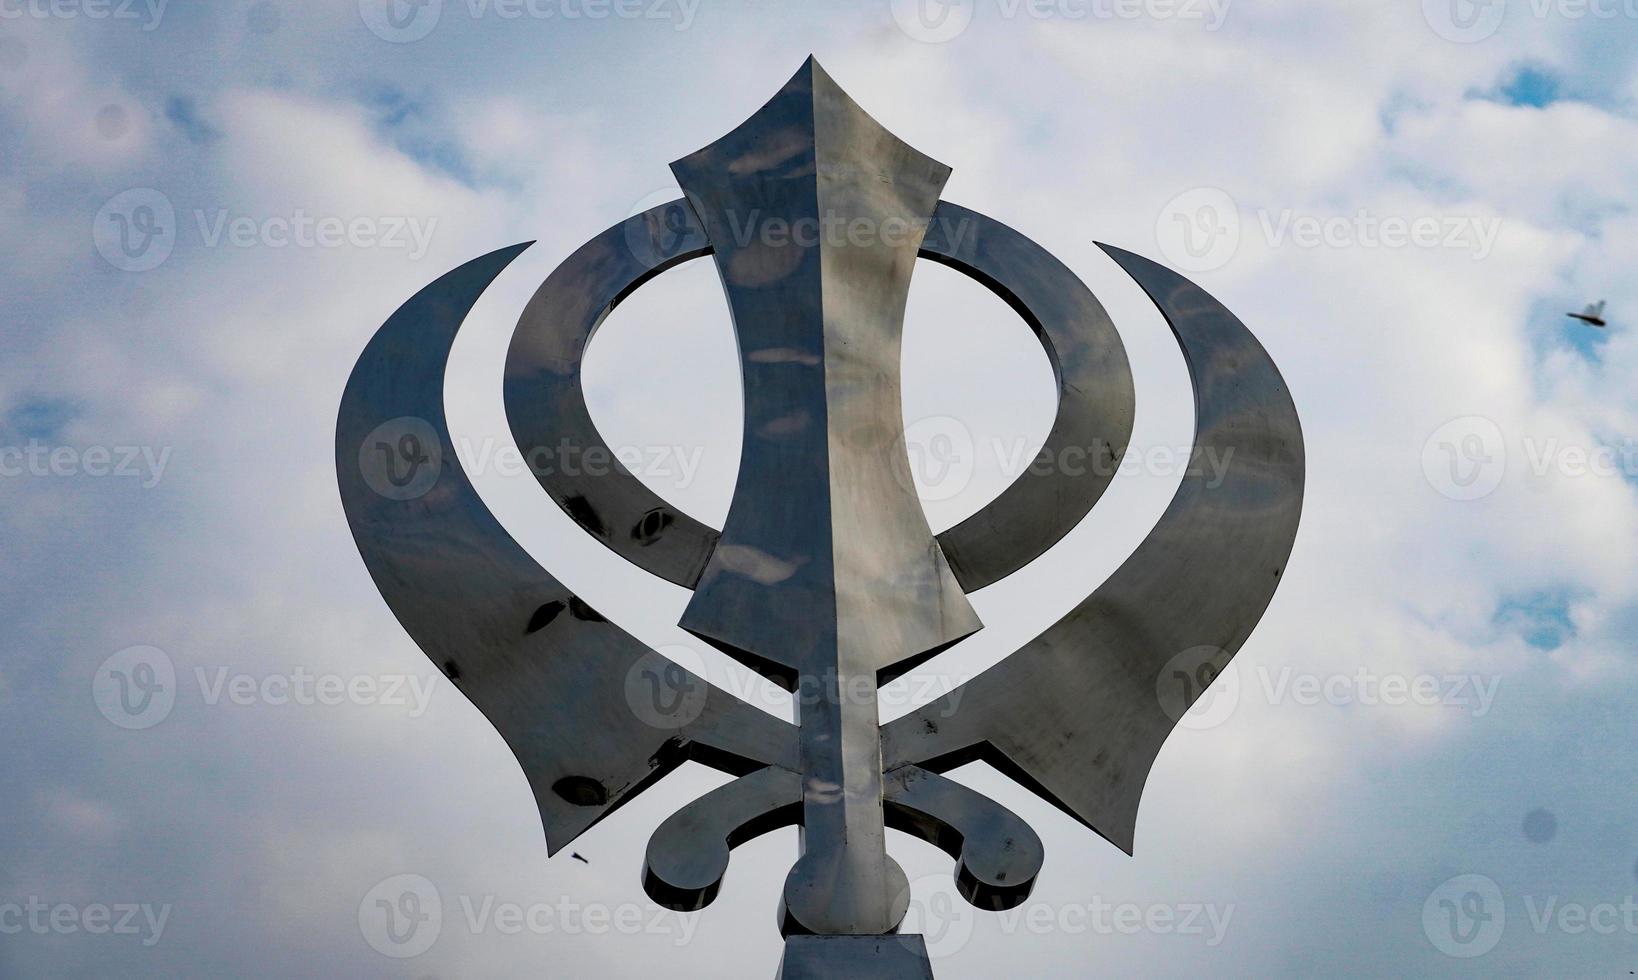 Sikhismus-Symbol Khanda-Bild im Himmel foto